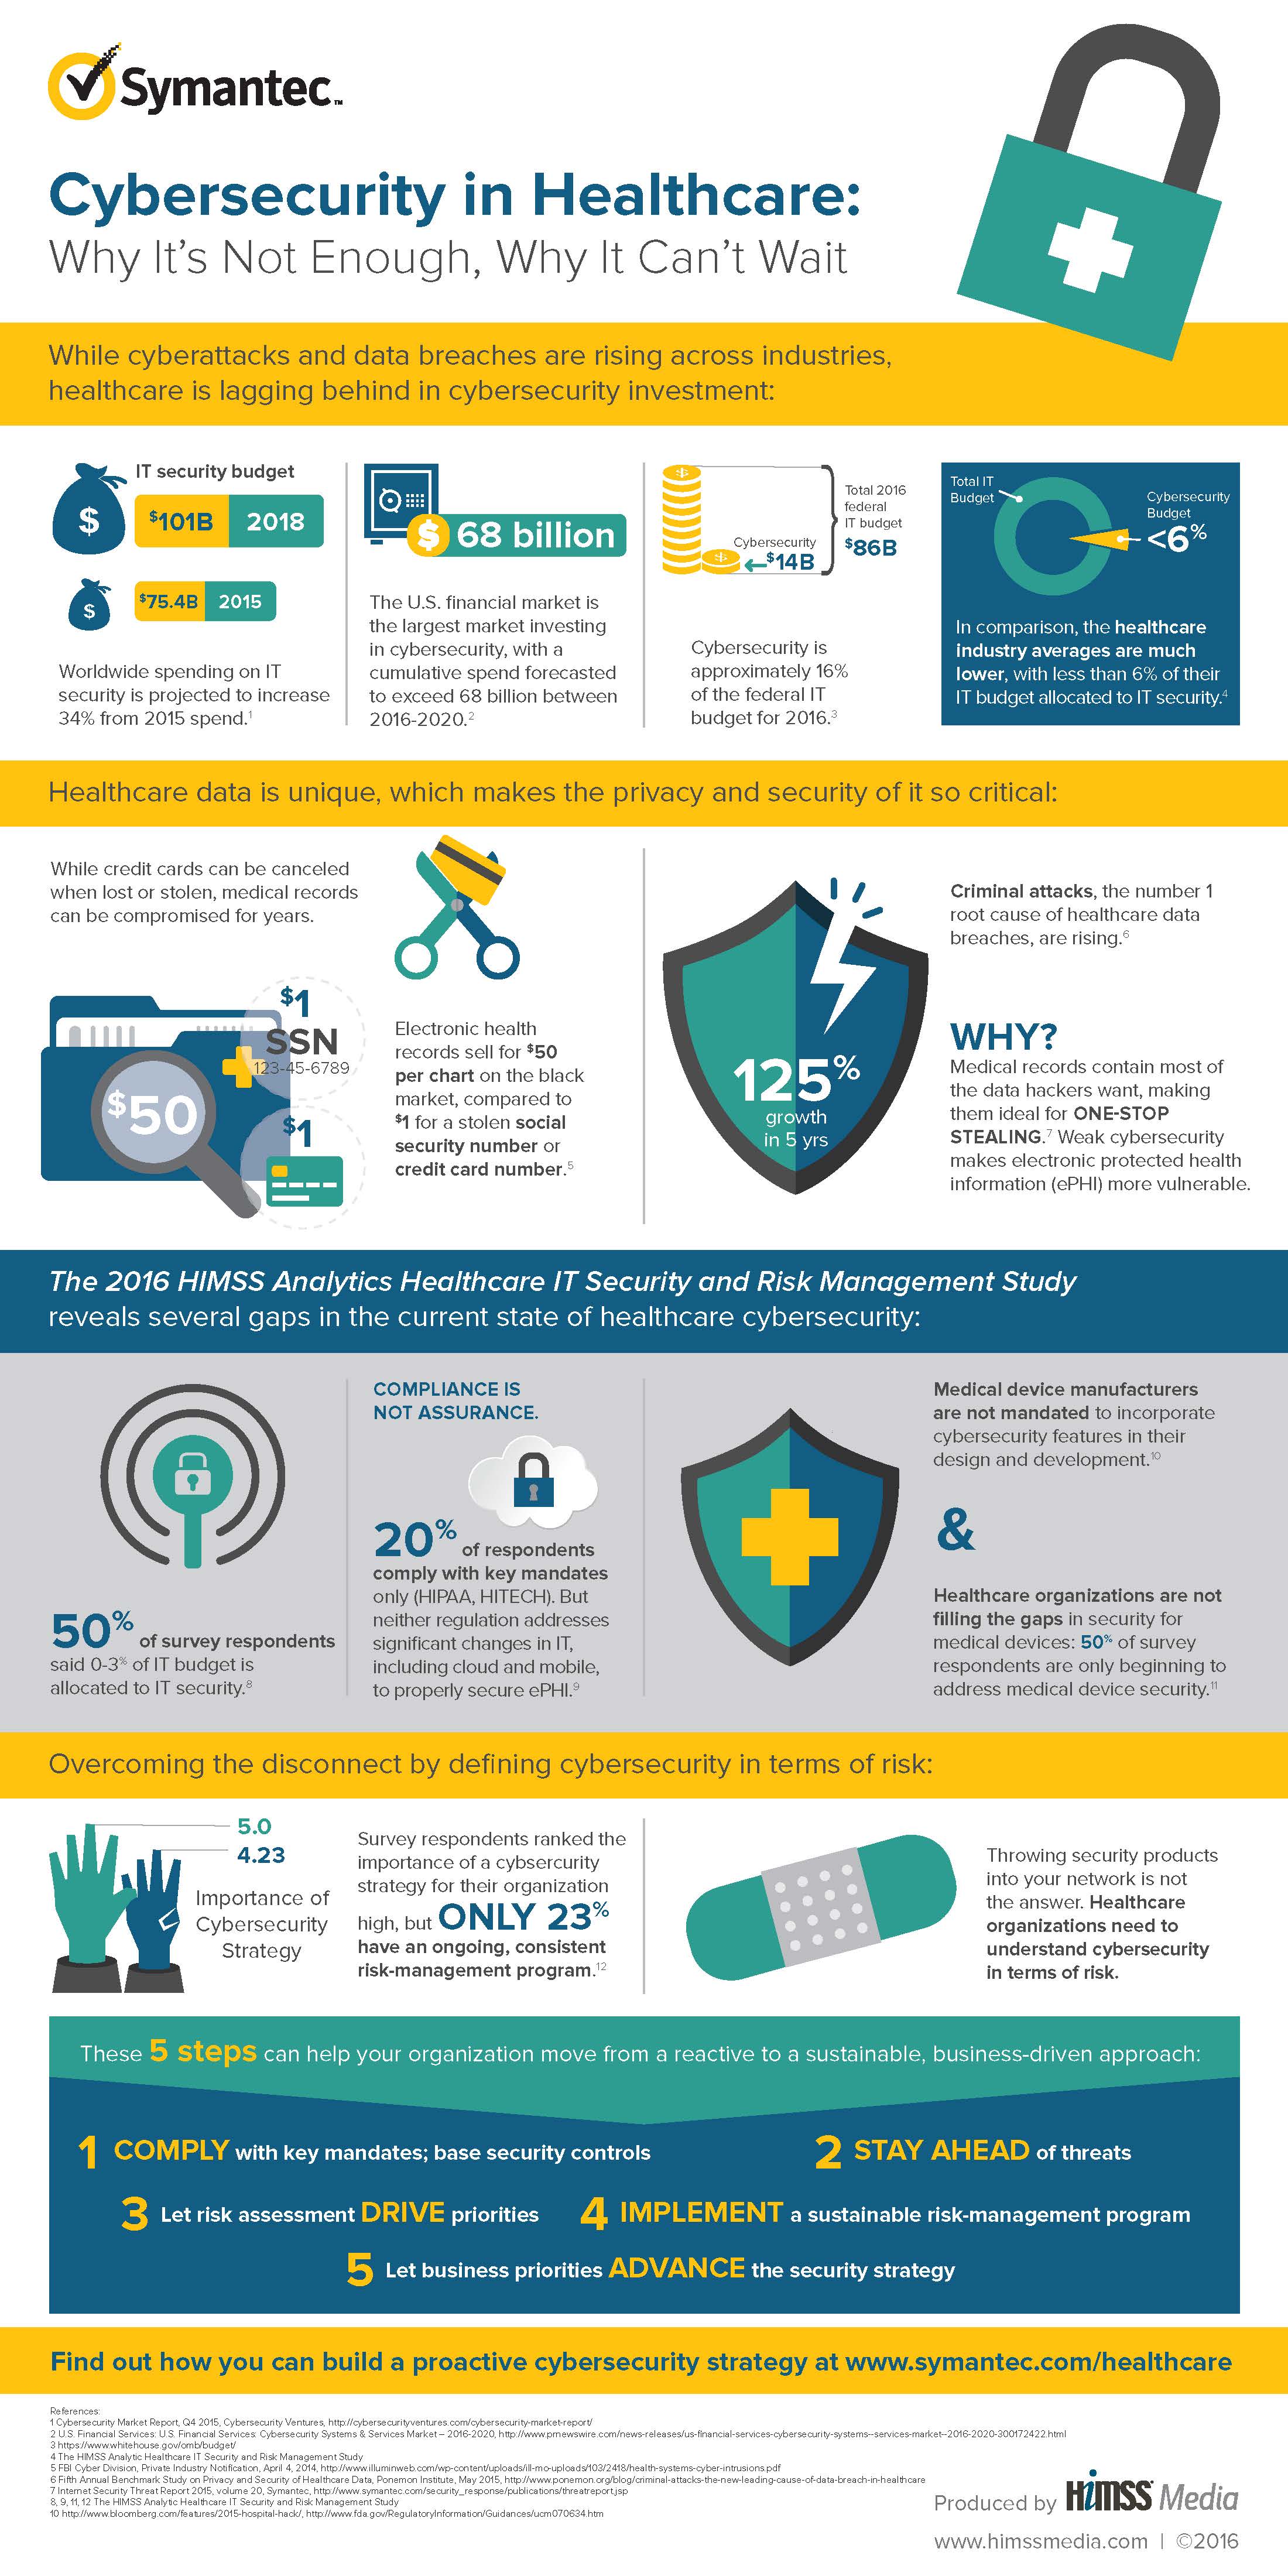 Healthcare IT Security Risk Management